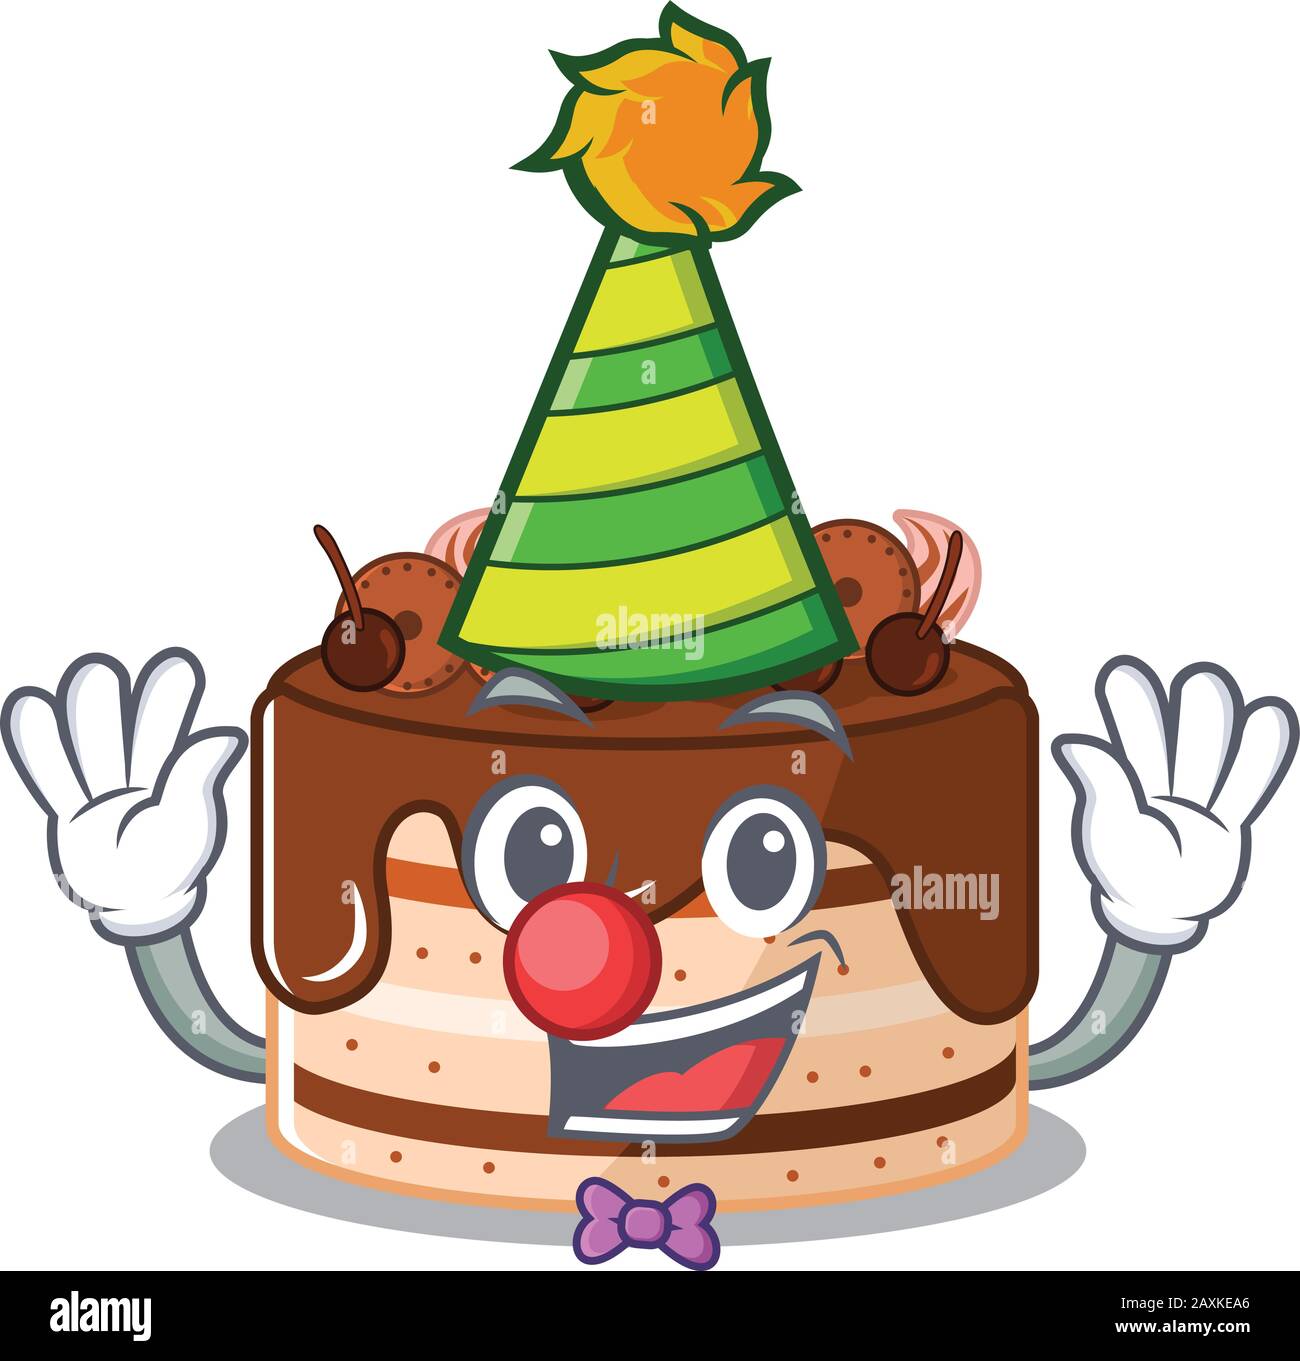 Funny Clown chocolate cake cartoon character mascot design Stock ...